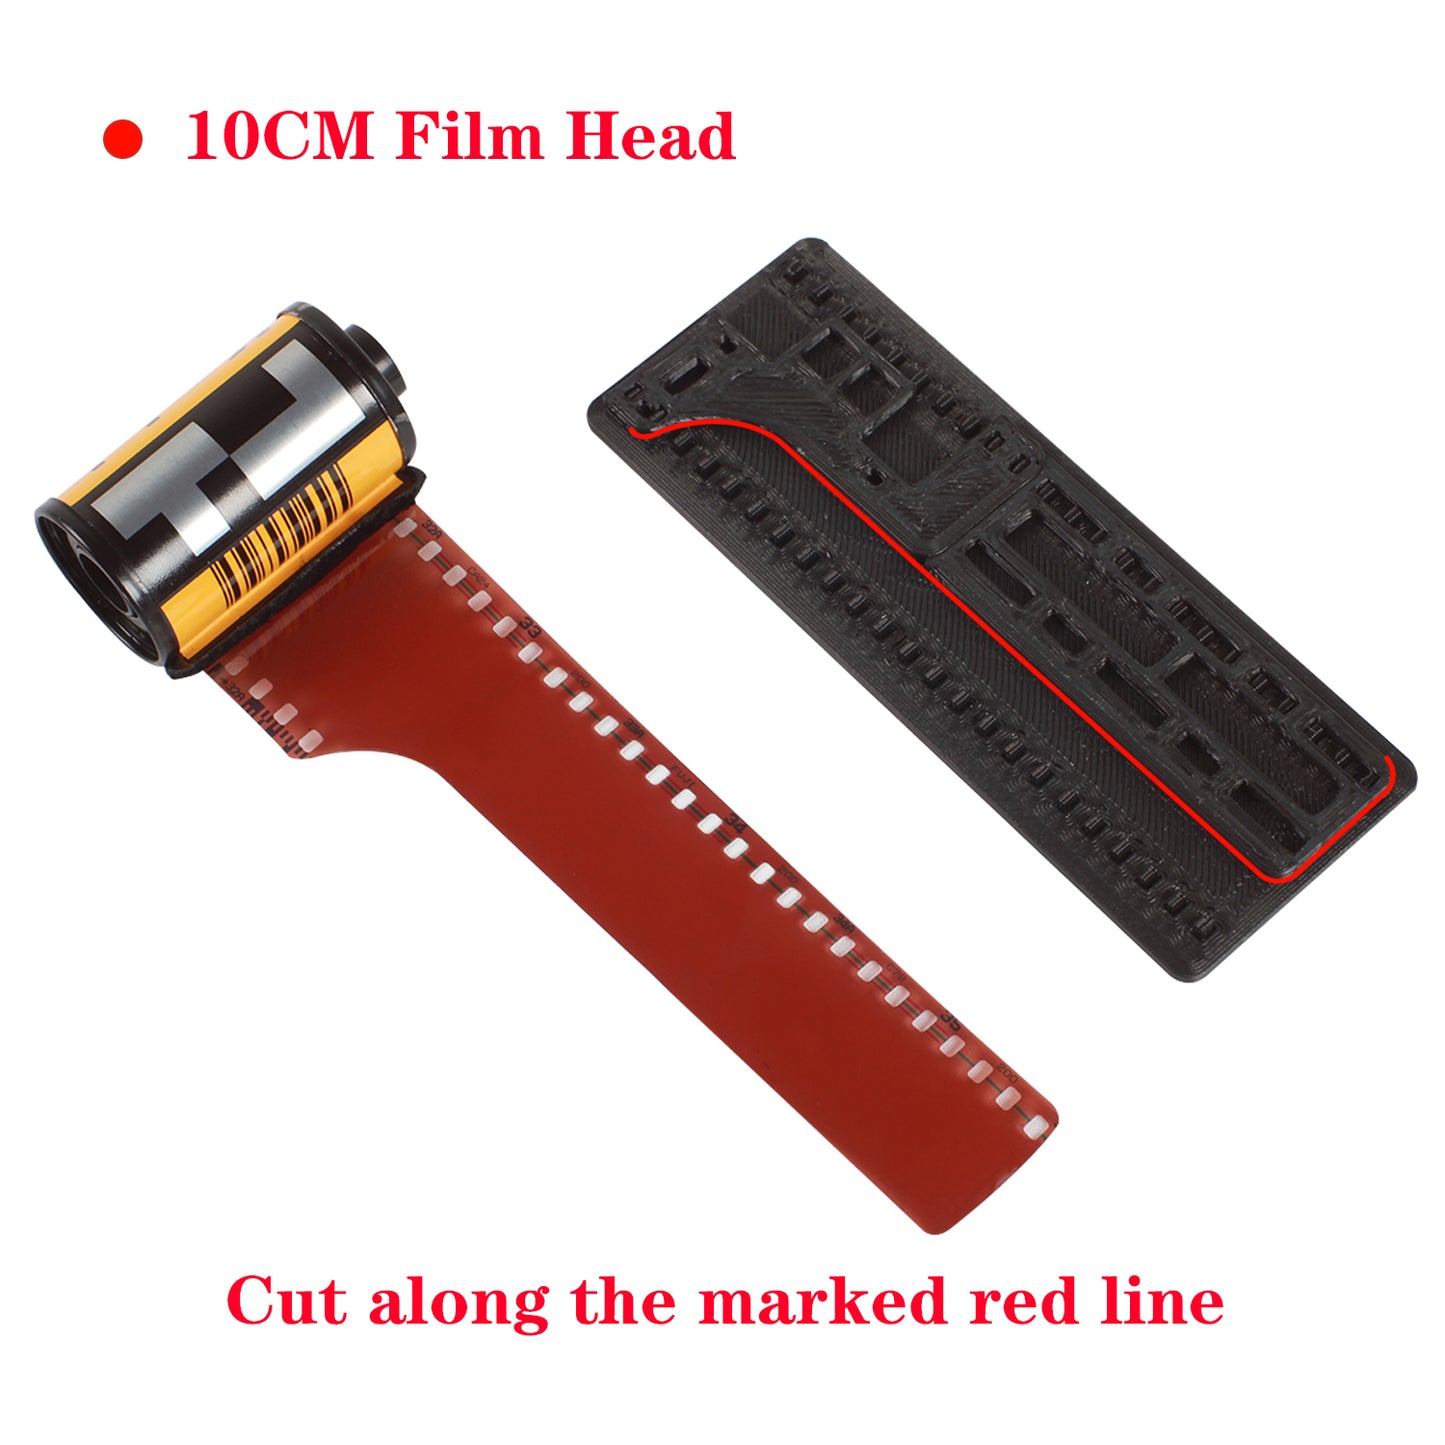 Multi-funzione Film Leader Cutter Taglio Modello per Vintage Leica Ablon Barnack Leica 3a 3c m1 m2 m3 Film Cutting 5cm 10cm Guide Tool